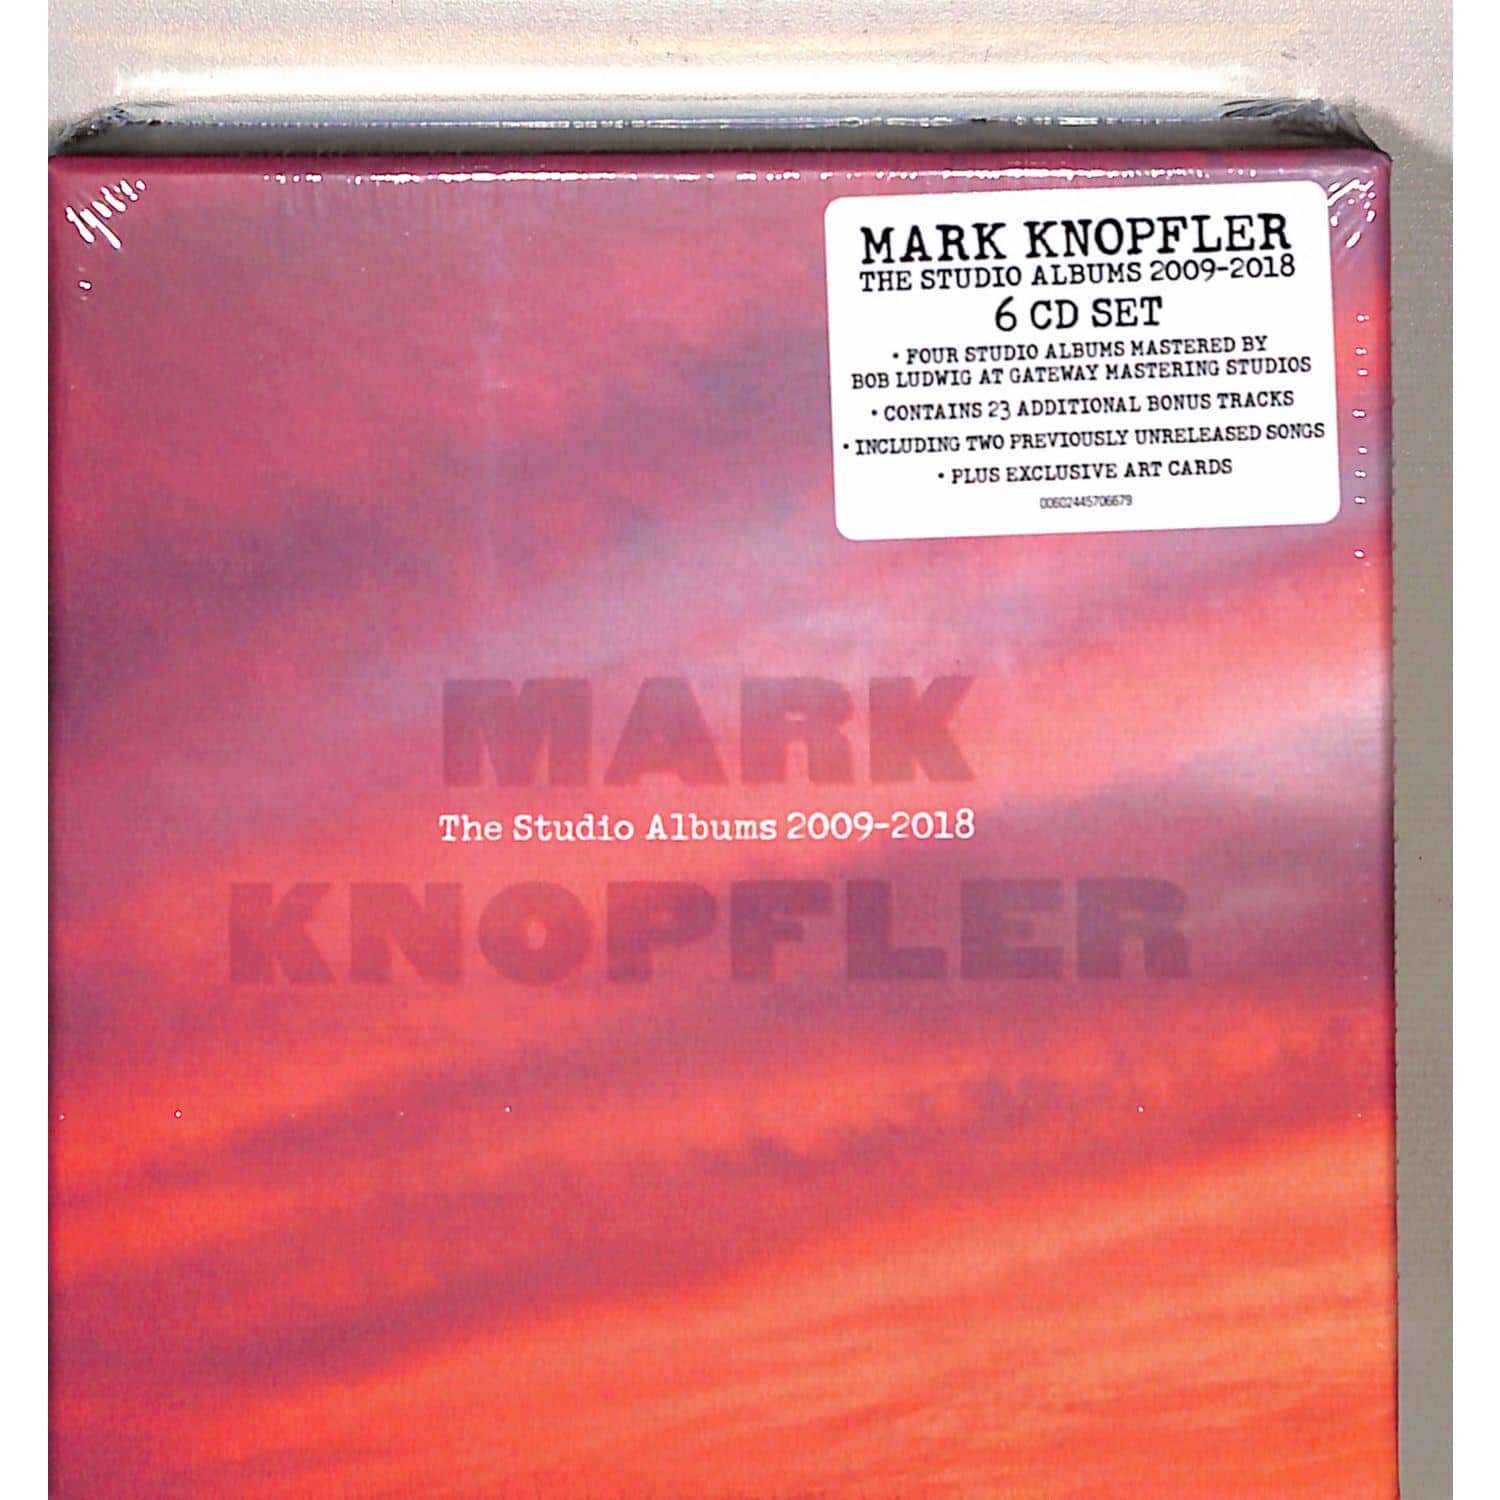 Mark Knopfler - THE STUDIO ALBUMS 2009-2018 